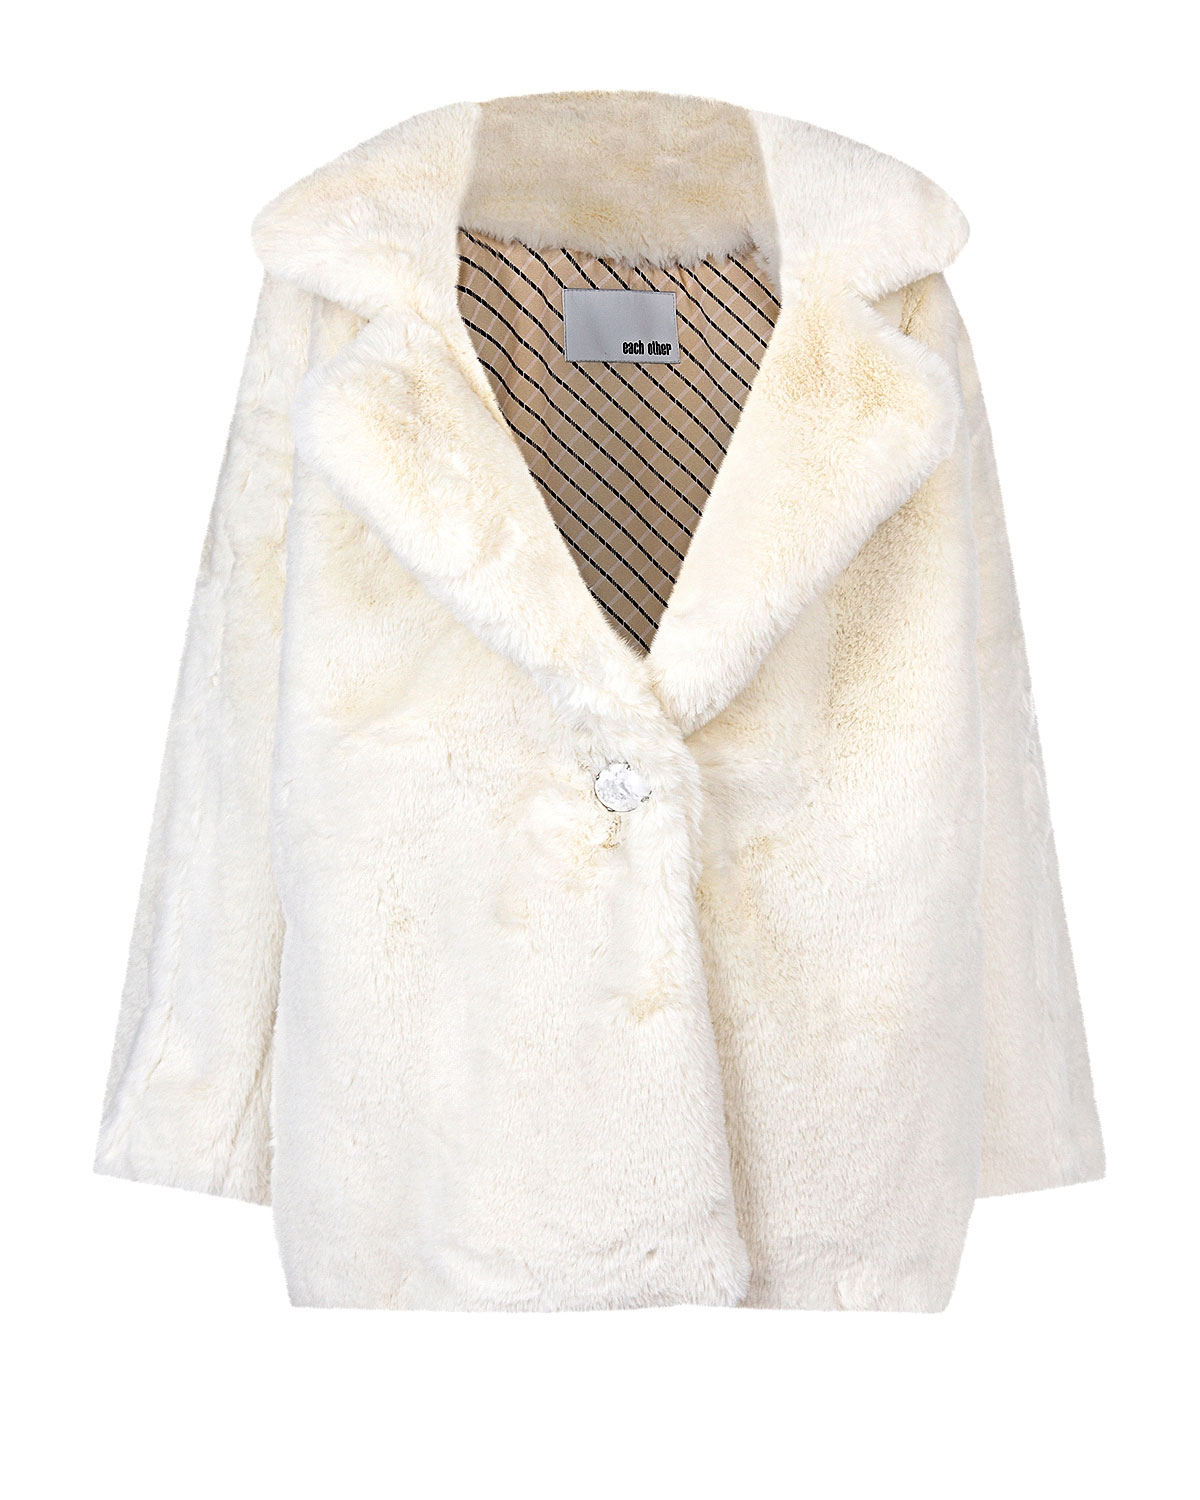 Меховое пальто с пуговицей из натурального камня Each Other, размер 40, цвет белый